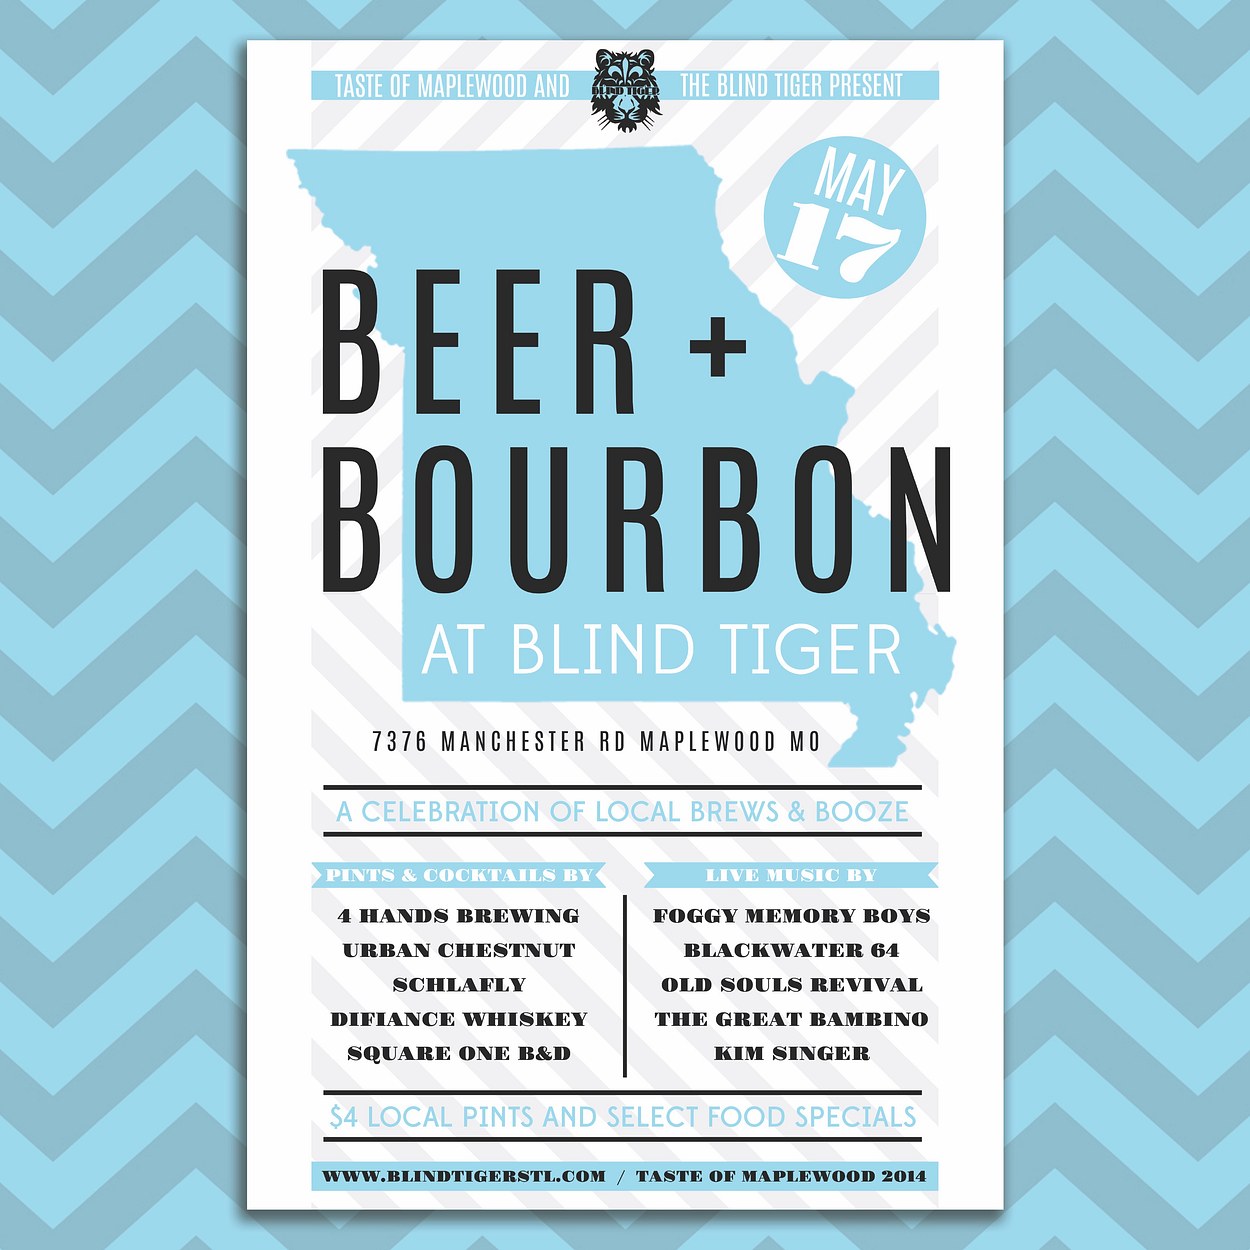 Taste of Maplewood - Beer + Bourbon Event Poster